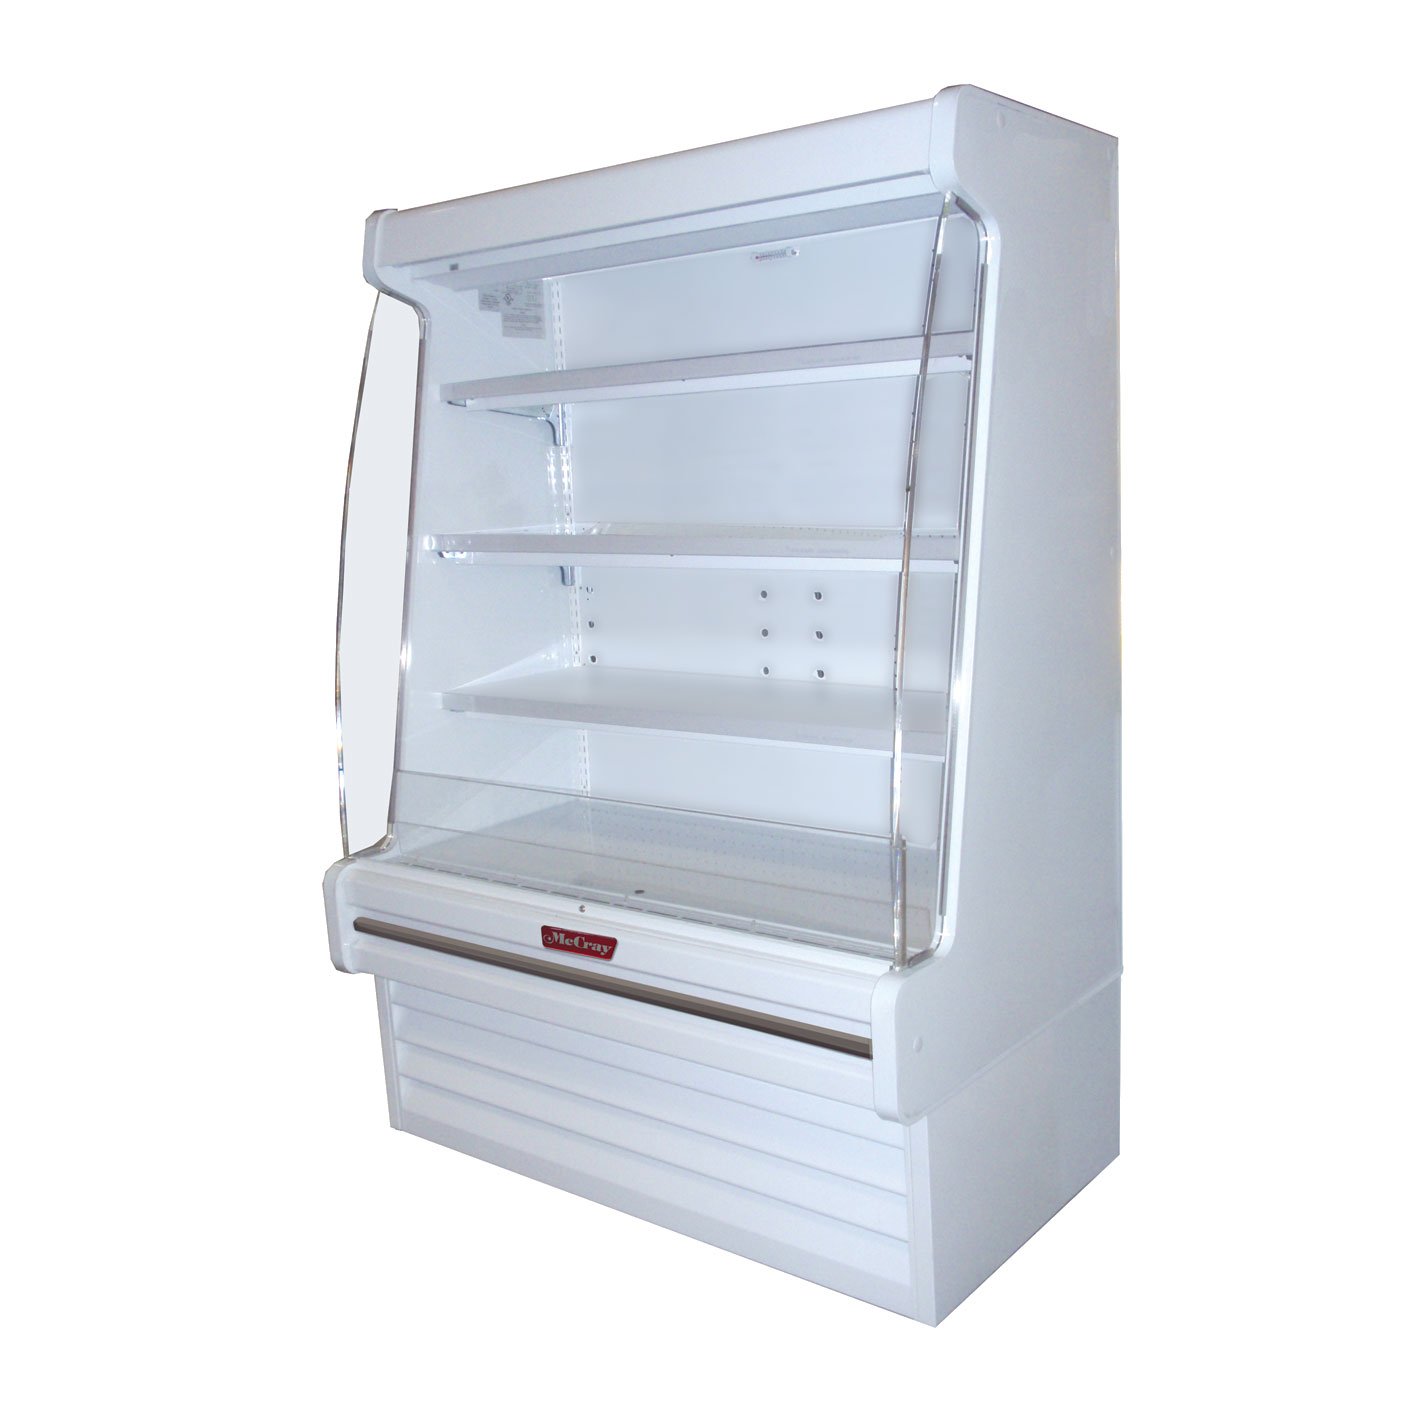 Howard-McCray SC-OD30E-6-LED 75'' Vertical Dairy Open Merchandiser in White, Self-Contained, 3 Shelves, w/ LED Lighting